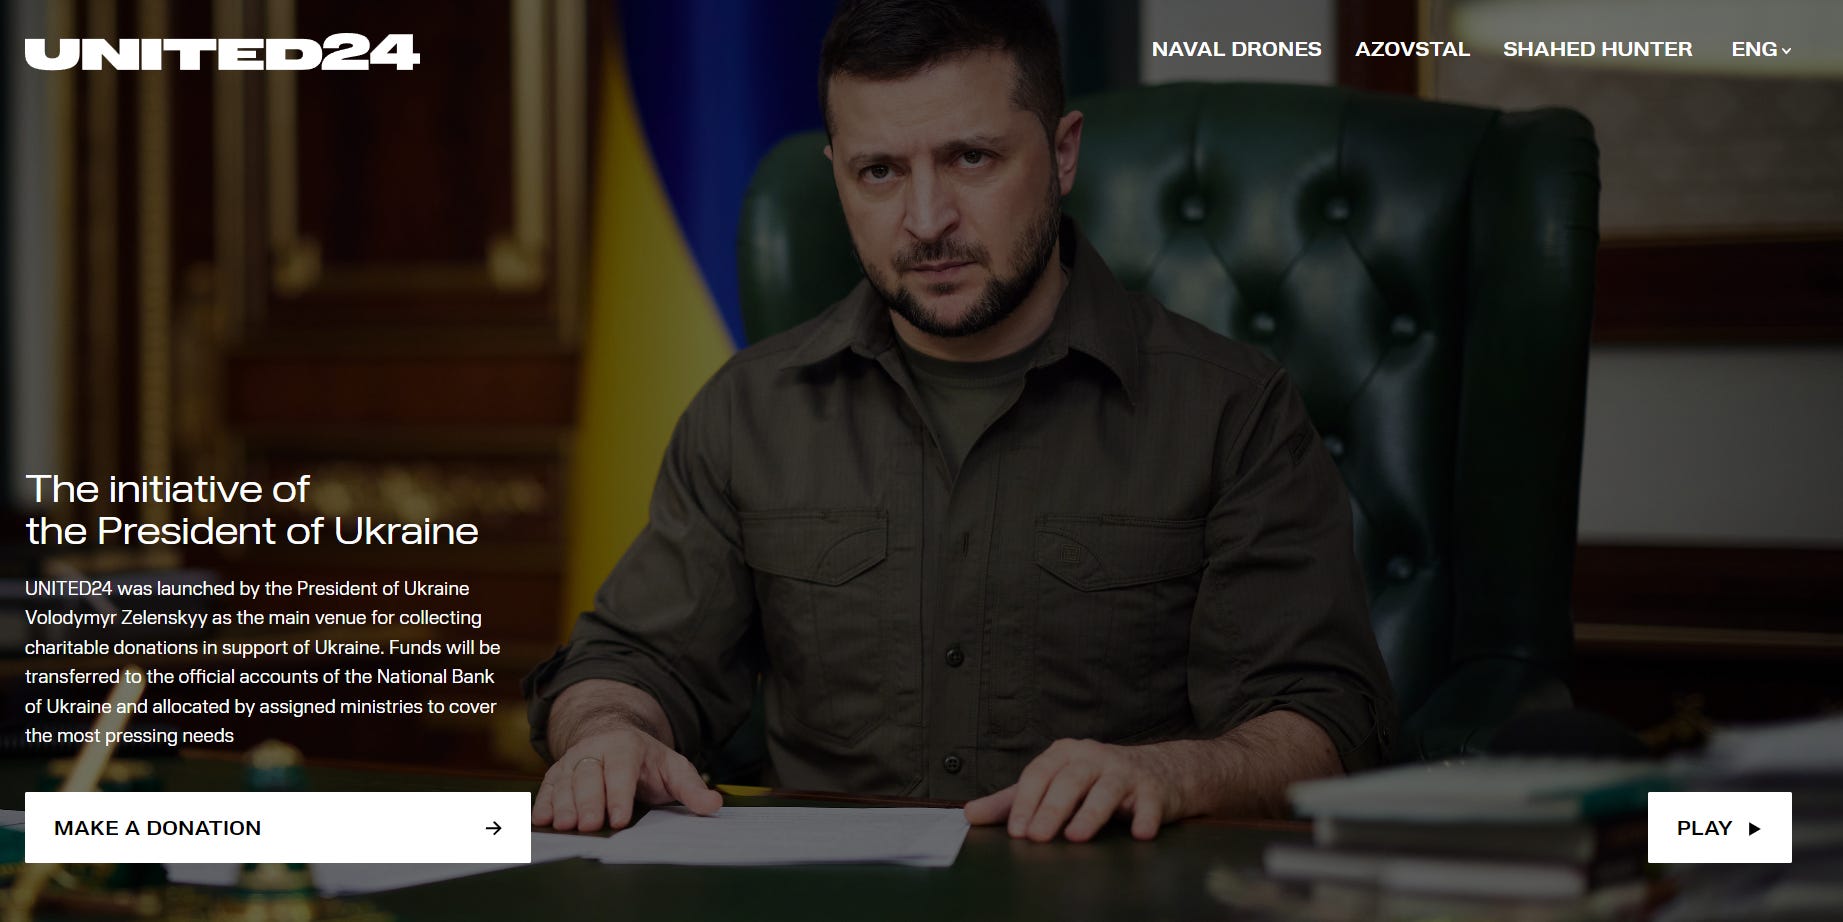 Creative director of Balenciaga Demna became the ambassador of United24 —  Official website of the President of Ukraine